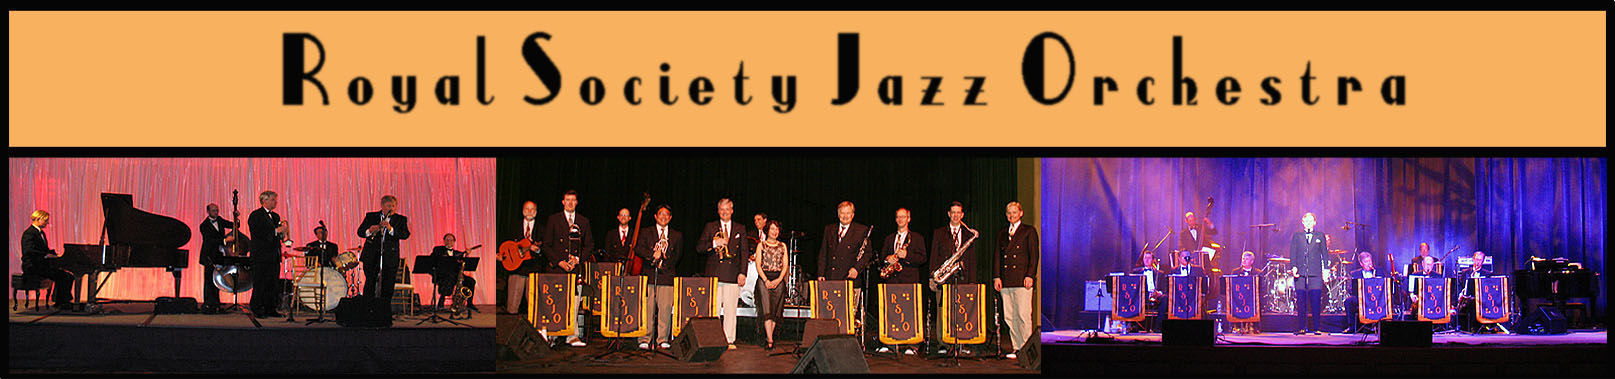 Royal Society Jazz Orchestra, big band, swing, 1920s jazz, traditional jazz, vintage weddings, San Francisco